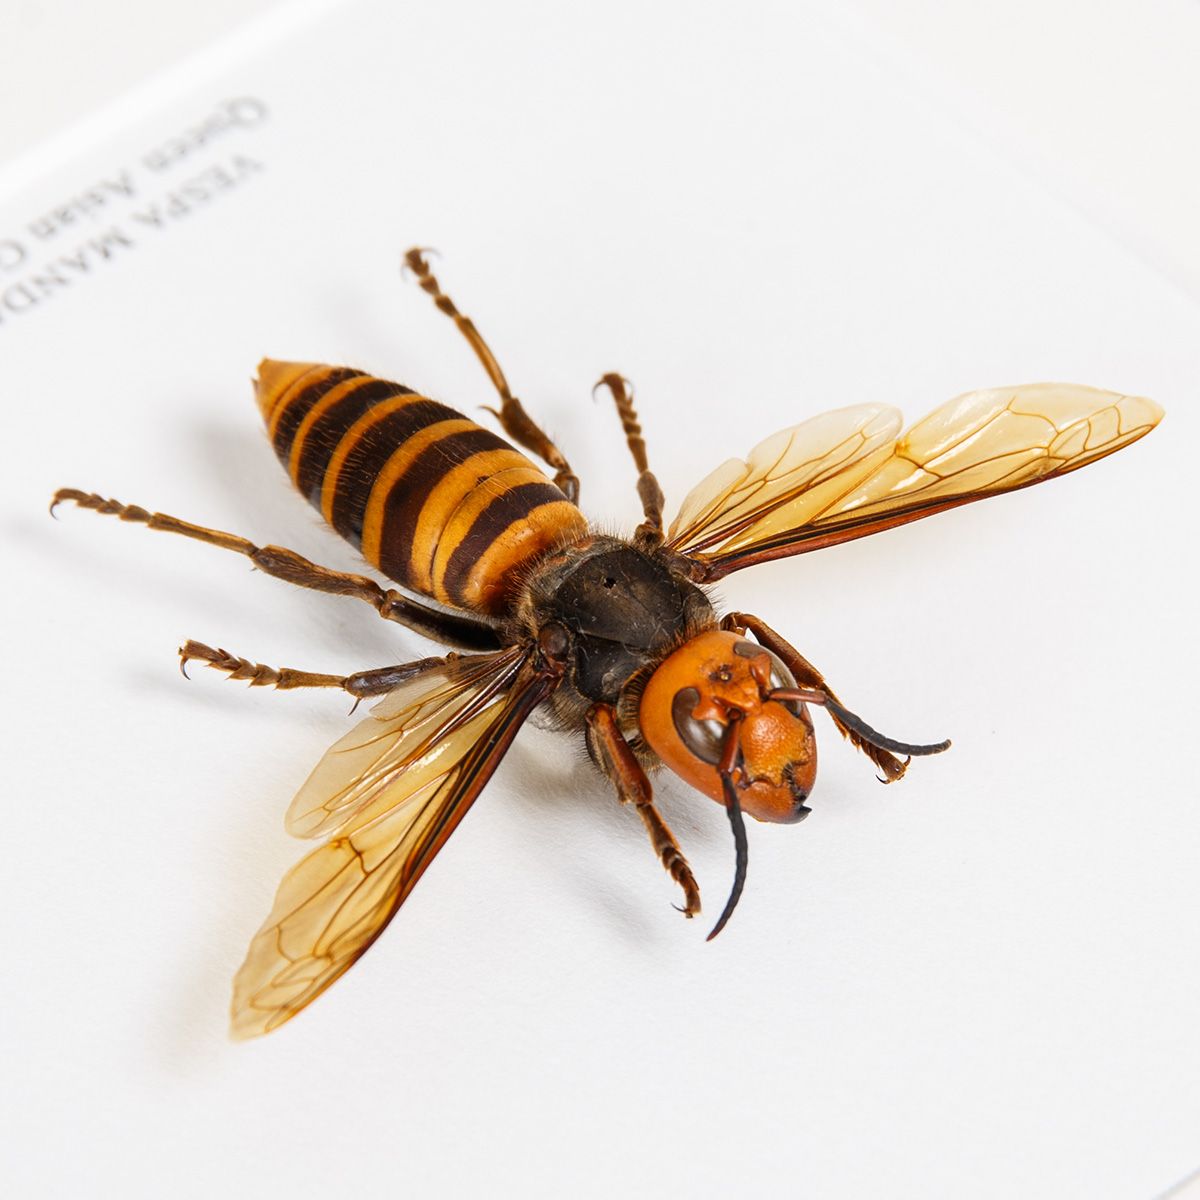 Queen Asian Giant Hornet in Box Frame (Vespa mandarinia)